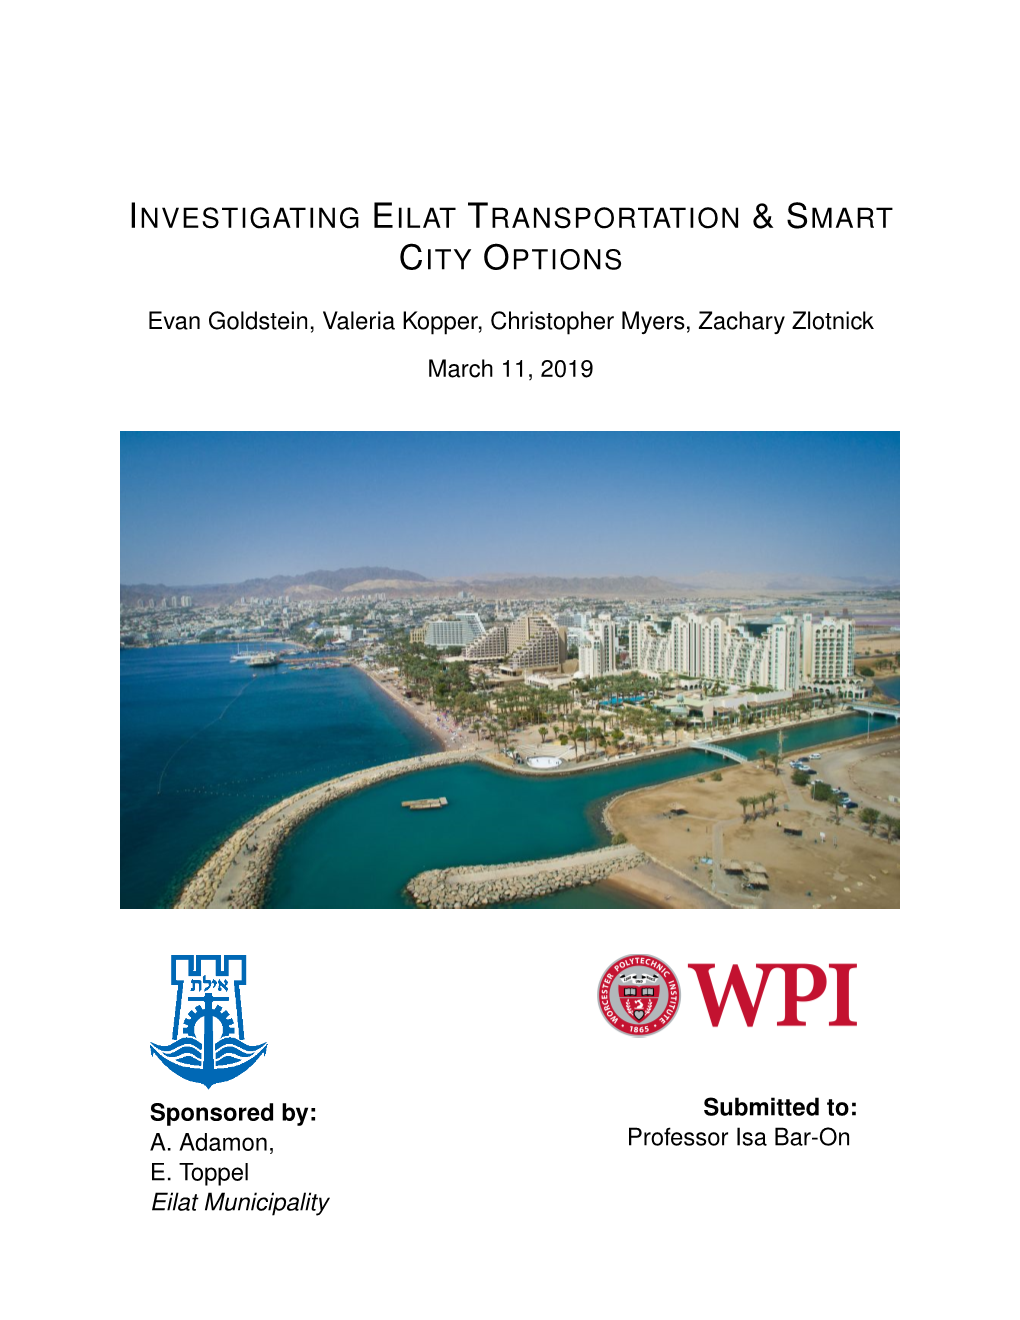 Investigating Eilat Transportation & Smart City Options